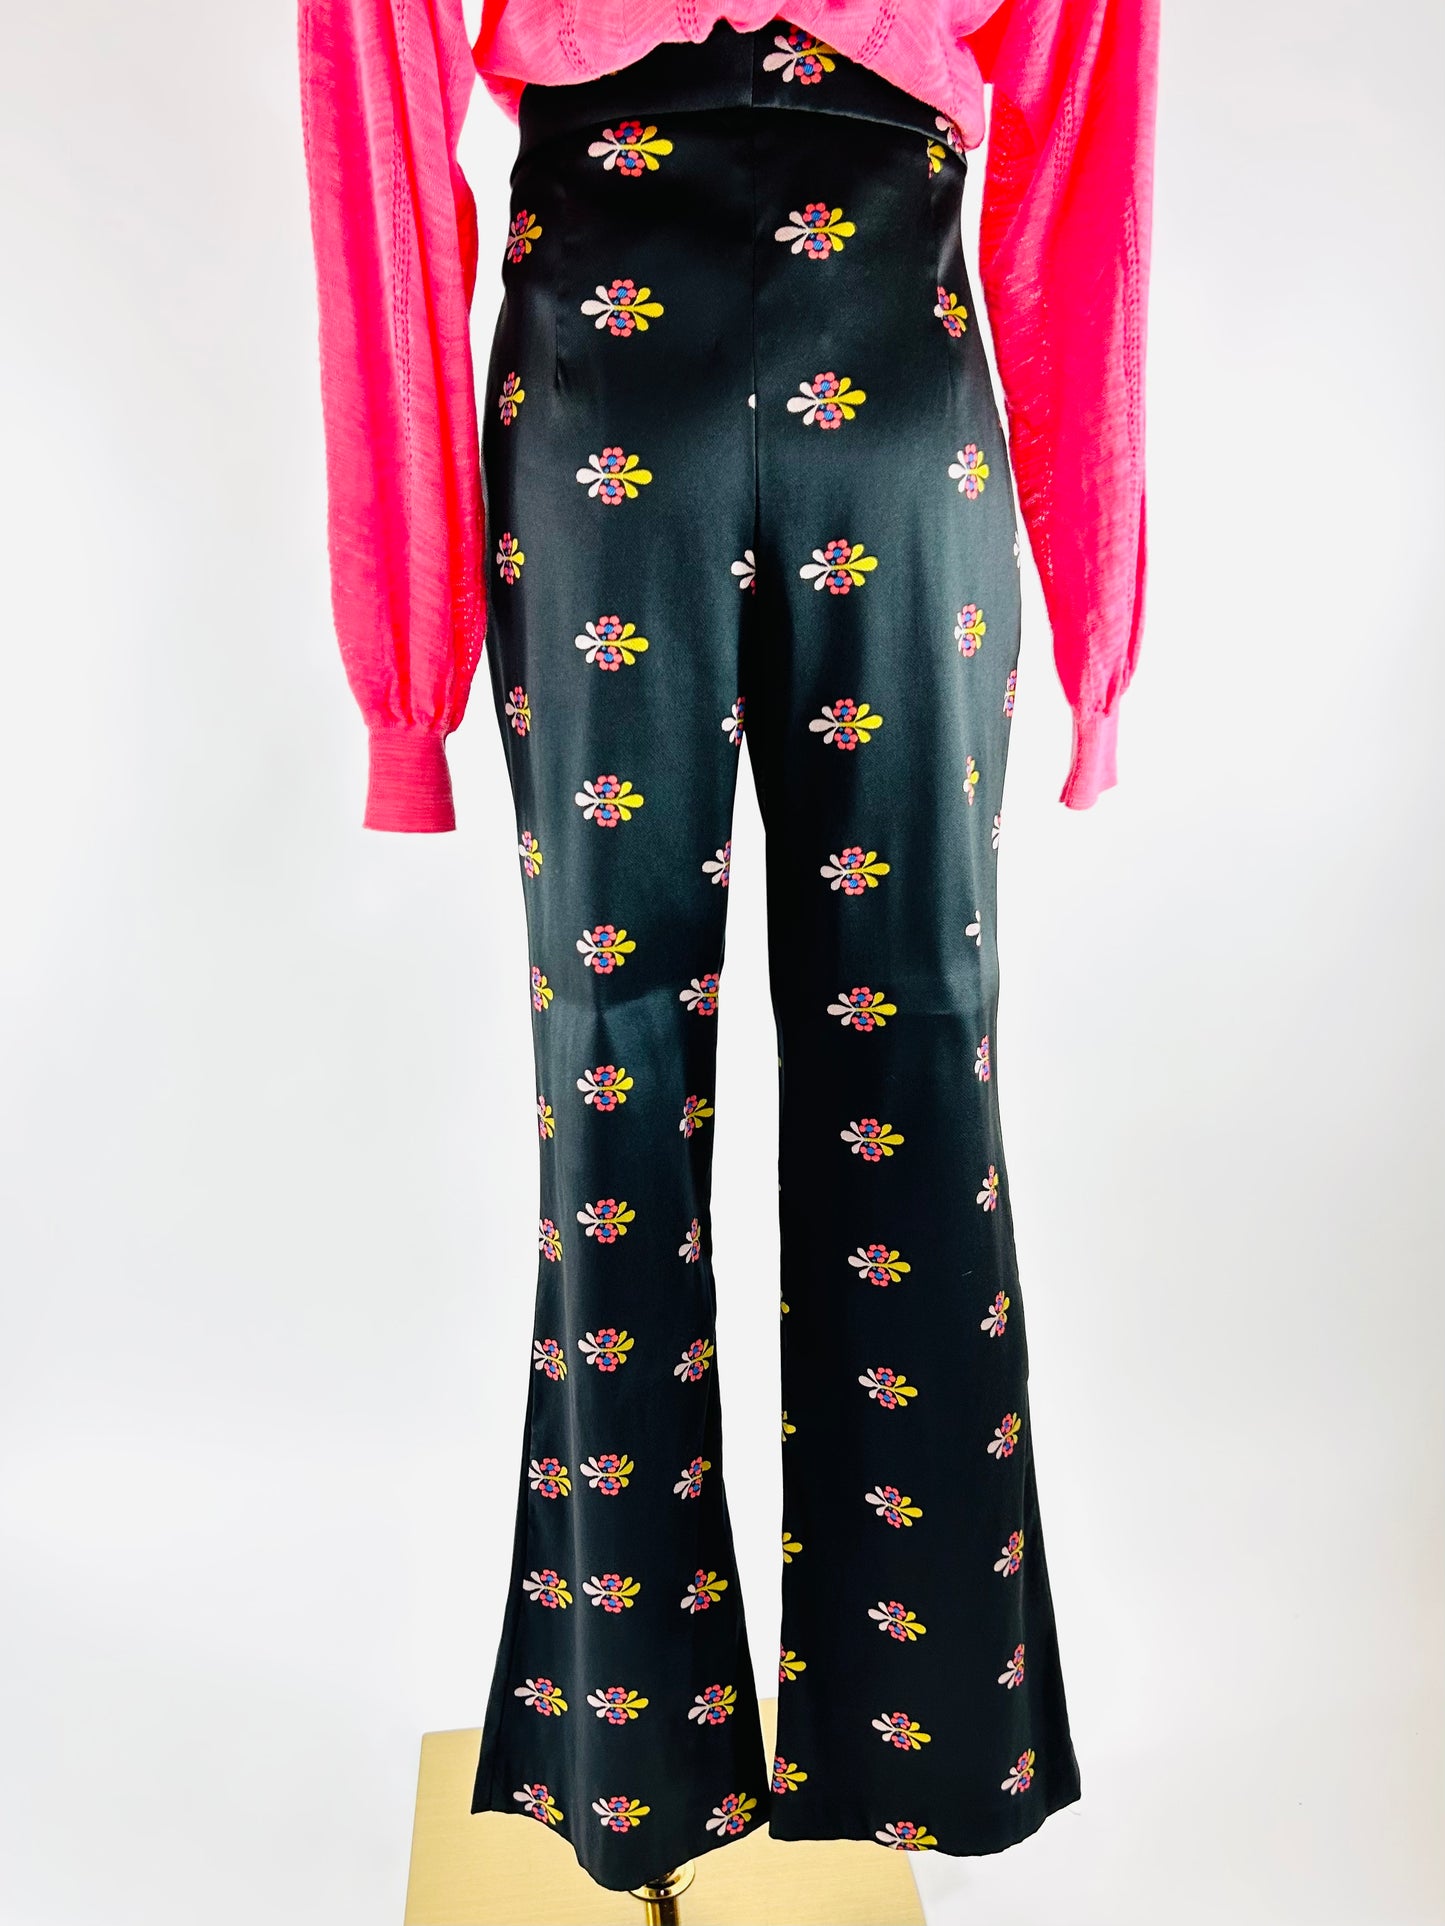 Cynthia Rowley Black pants with Floral Print